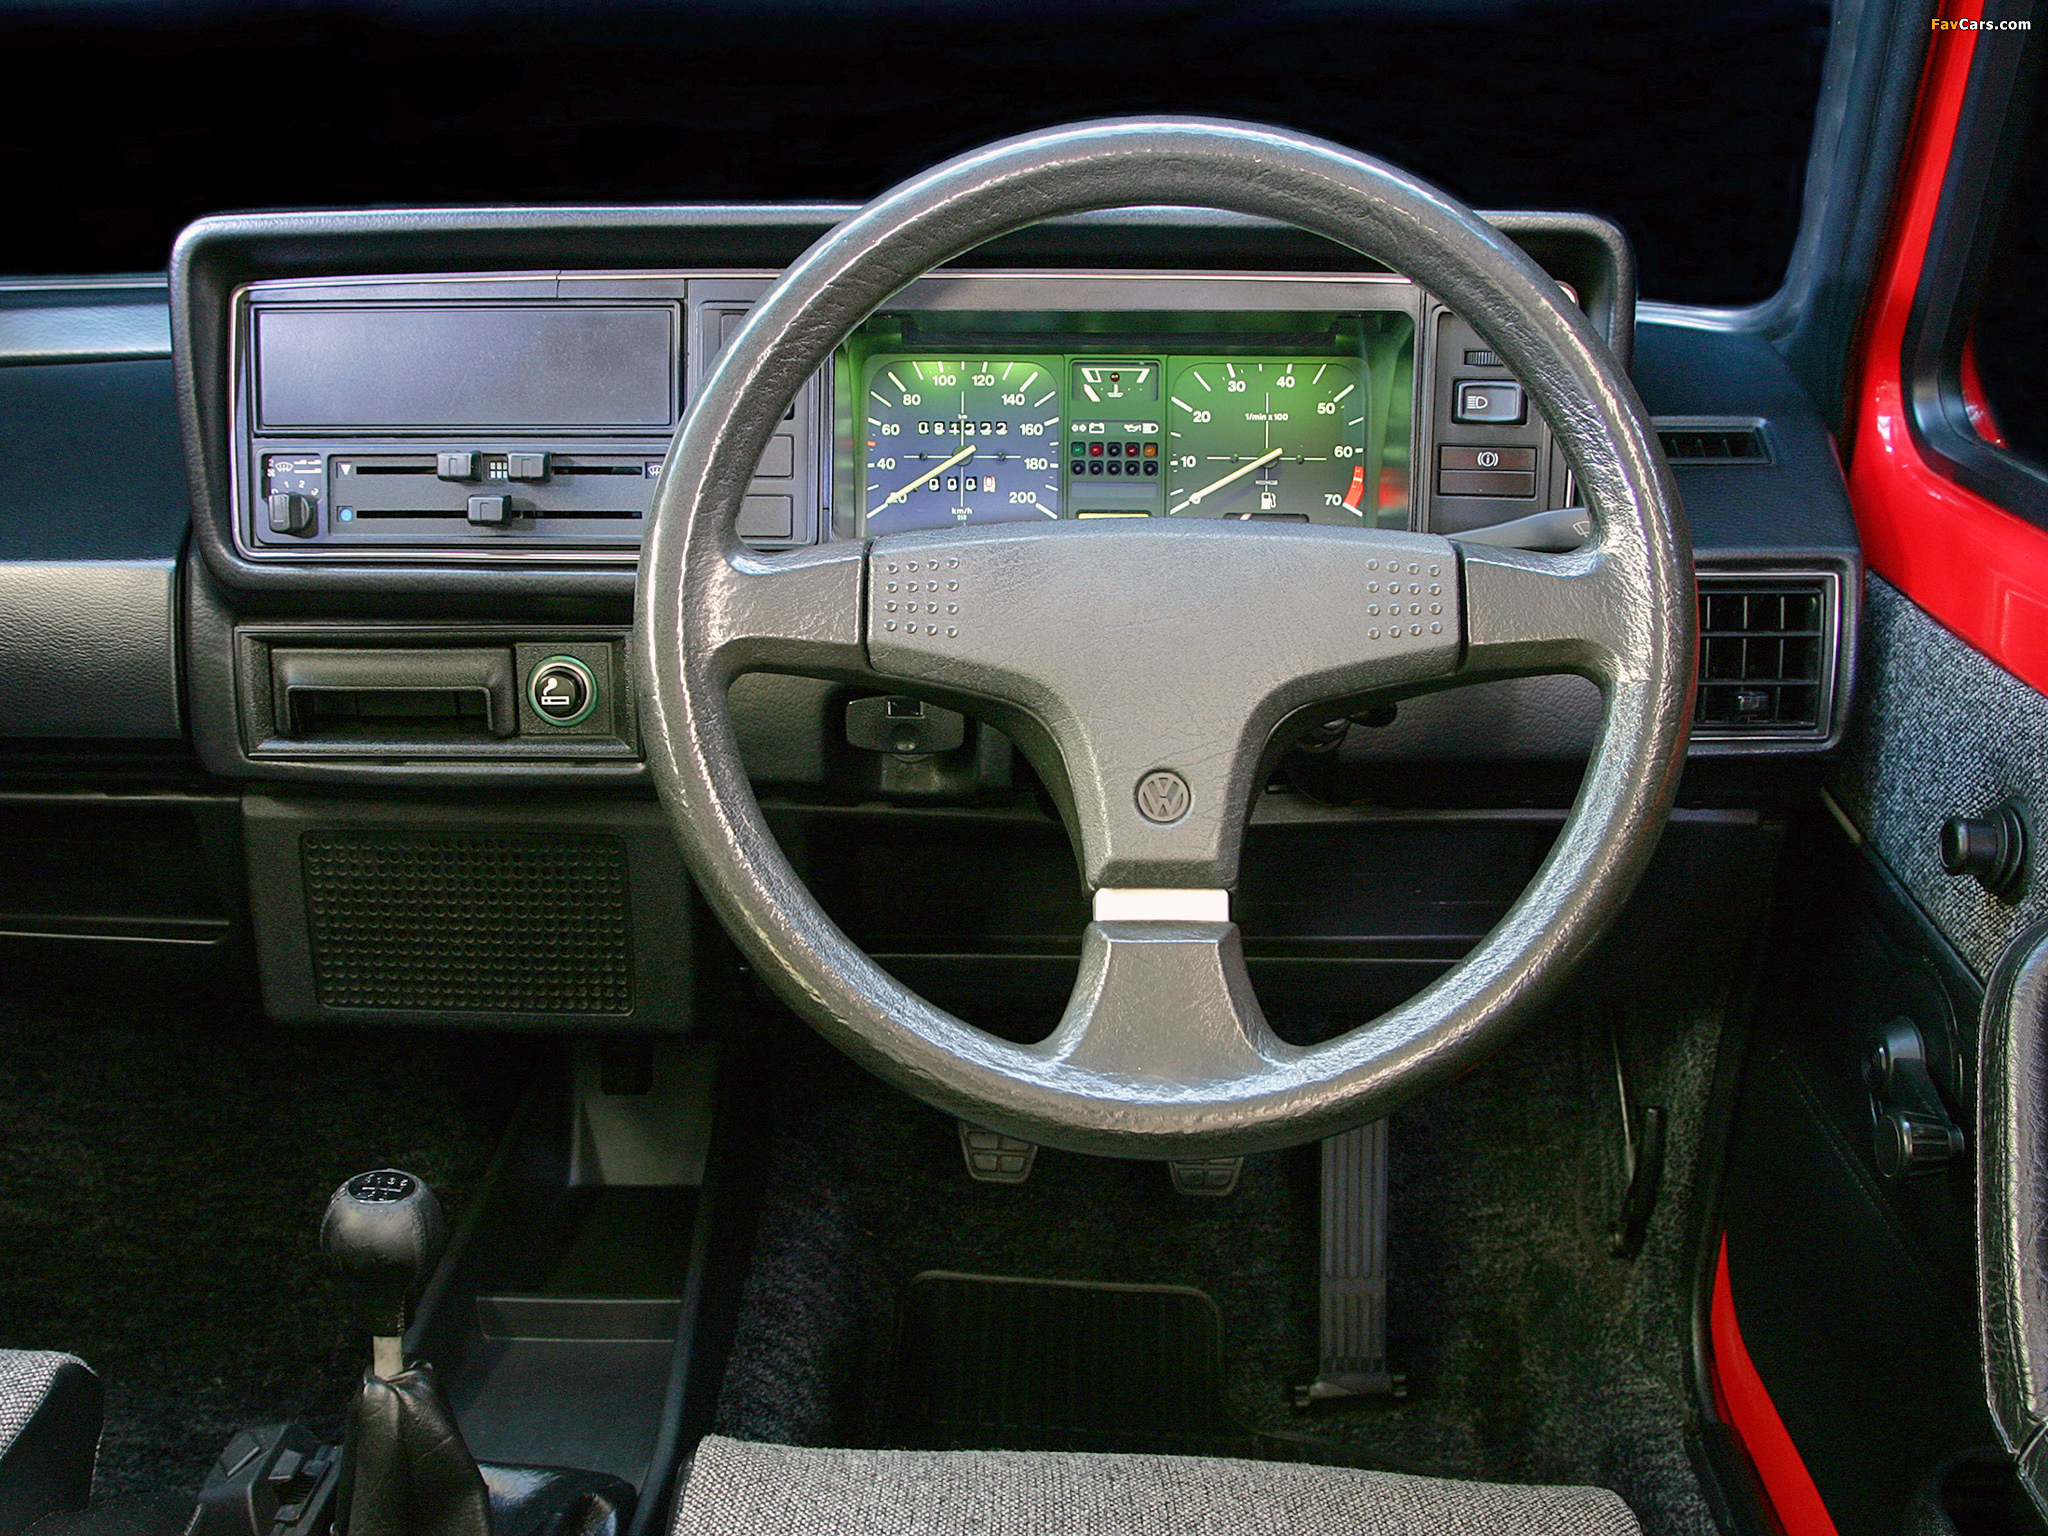 VW, Volkswagen, Citi Golf, Citi, Golf, Mark 1, Mk1, Rabbit, R, 1985, interior